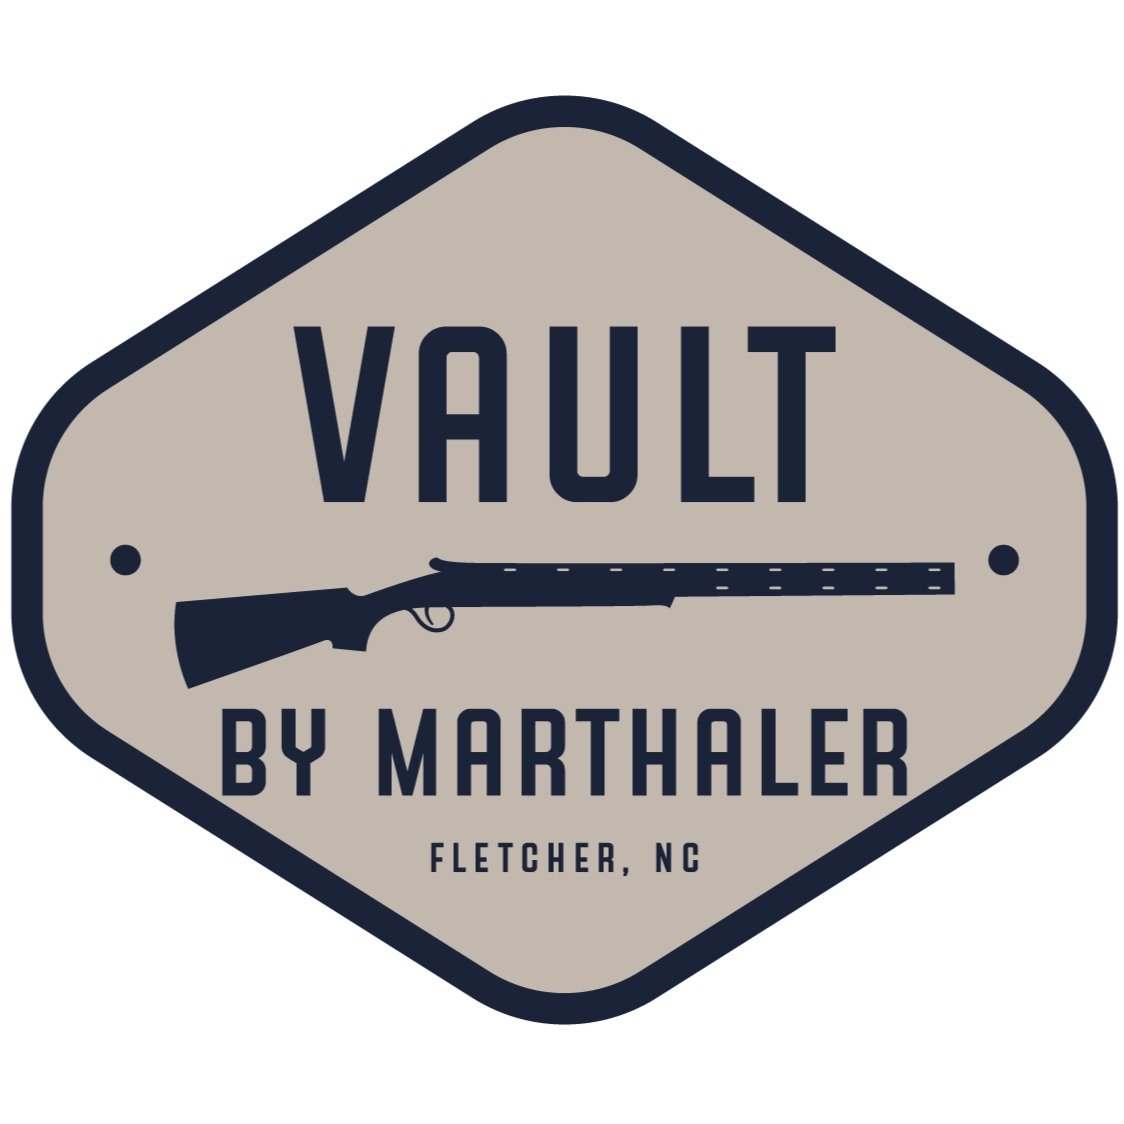 The Vault by Marthaler